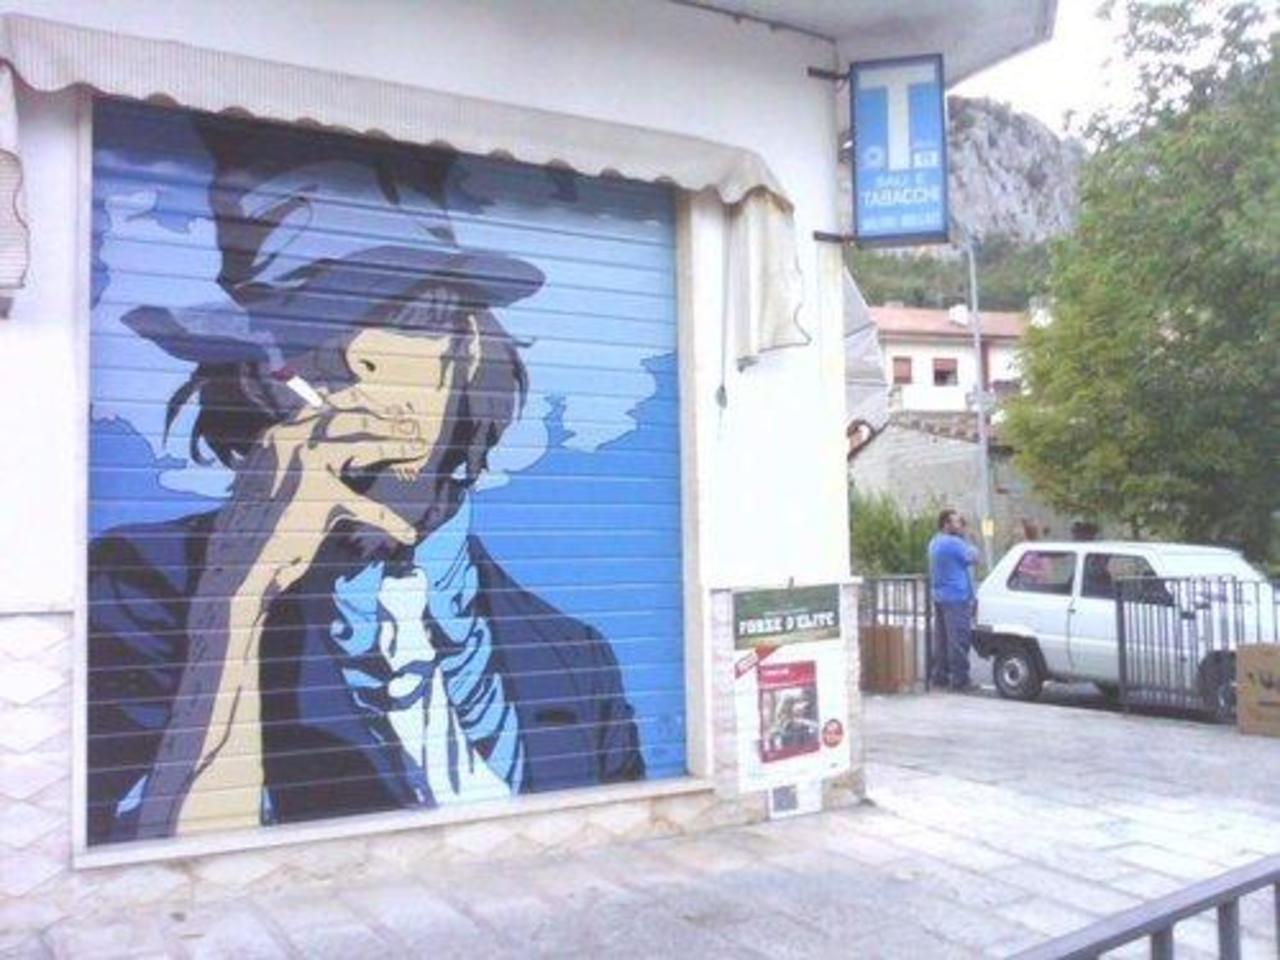 RT @henrijakubowicz: Go Anime go! • #streetart #graffiti #art #anime #funky #dope . : http://t.co/Jp7kCmUIlj